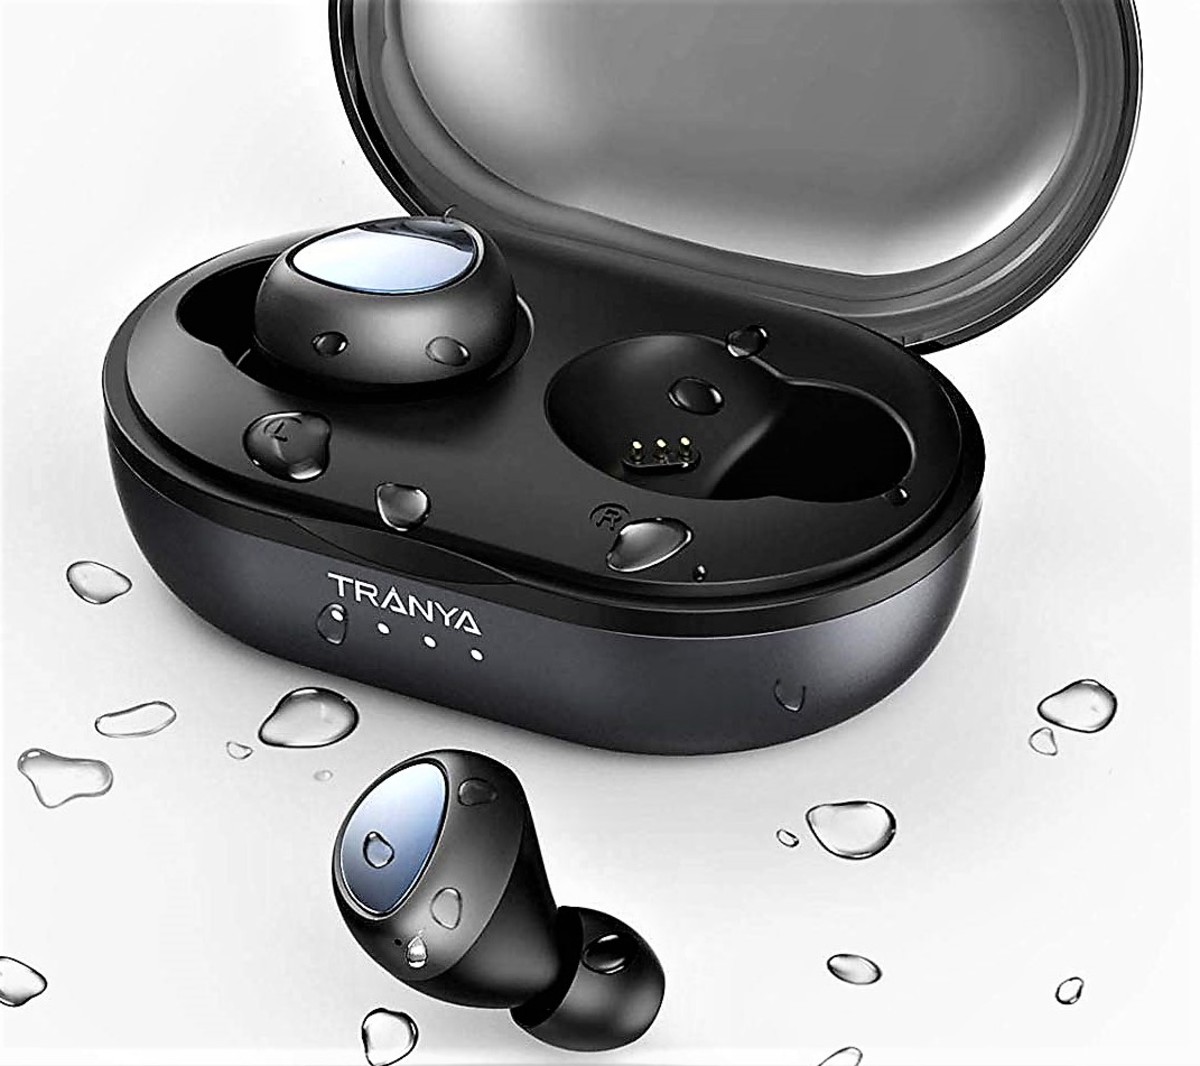 Product Review: Tranya Wireless Bluetooth 5.0 Headphones (T3)